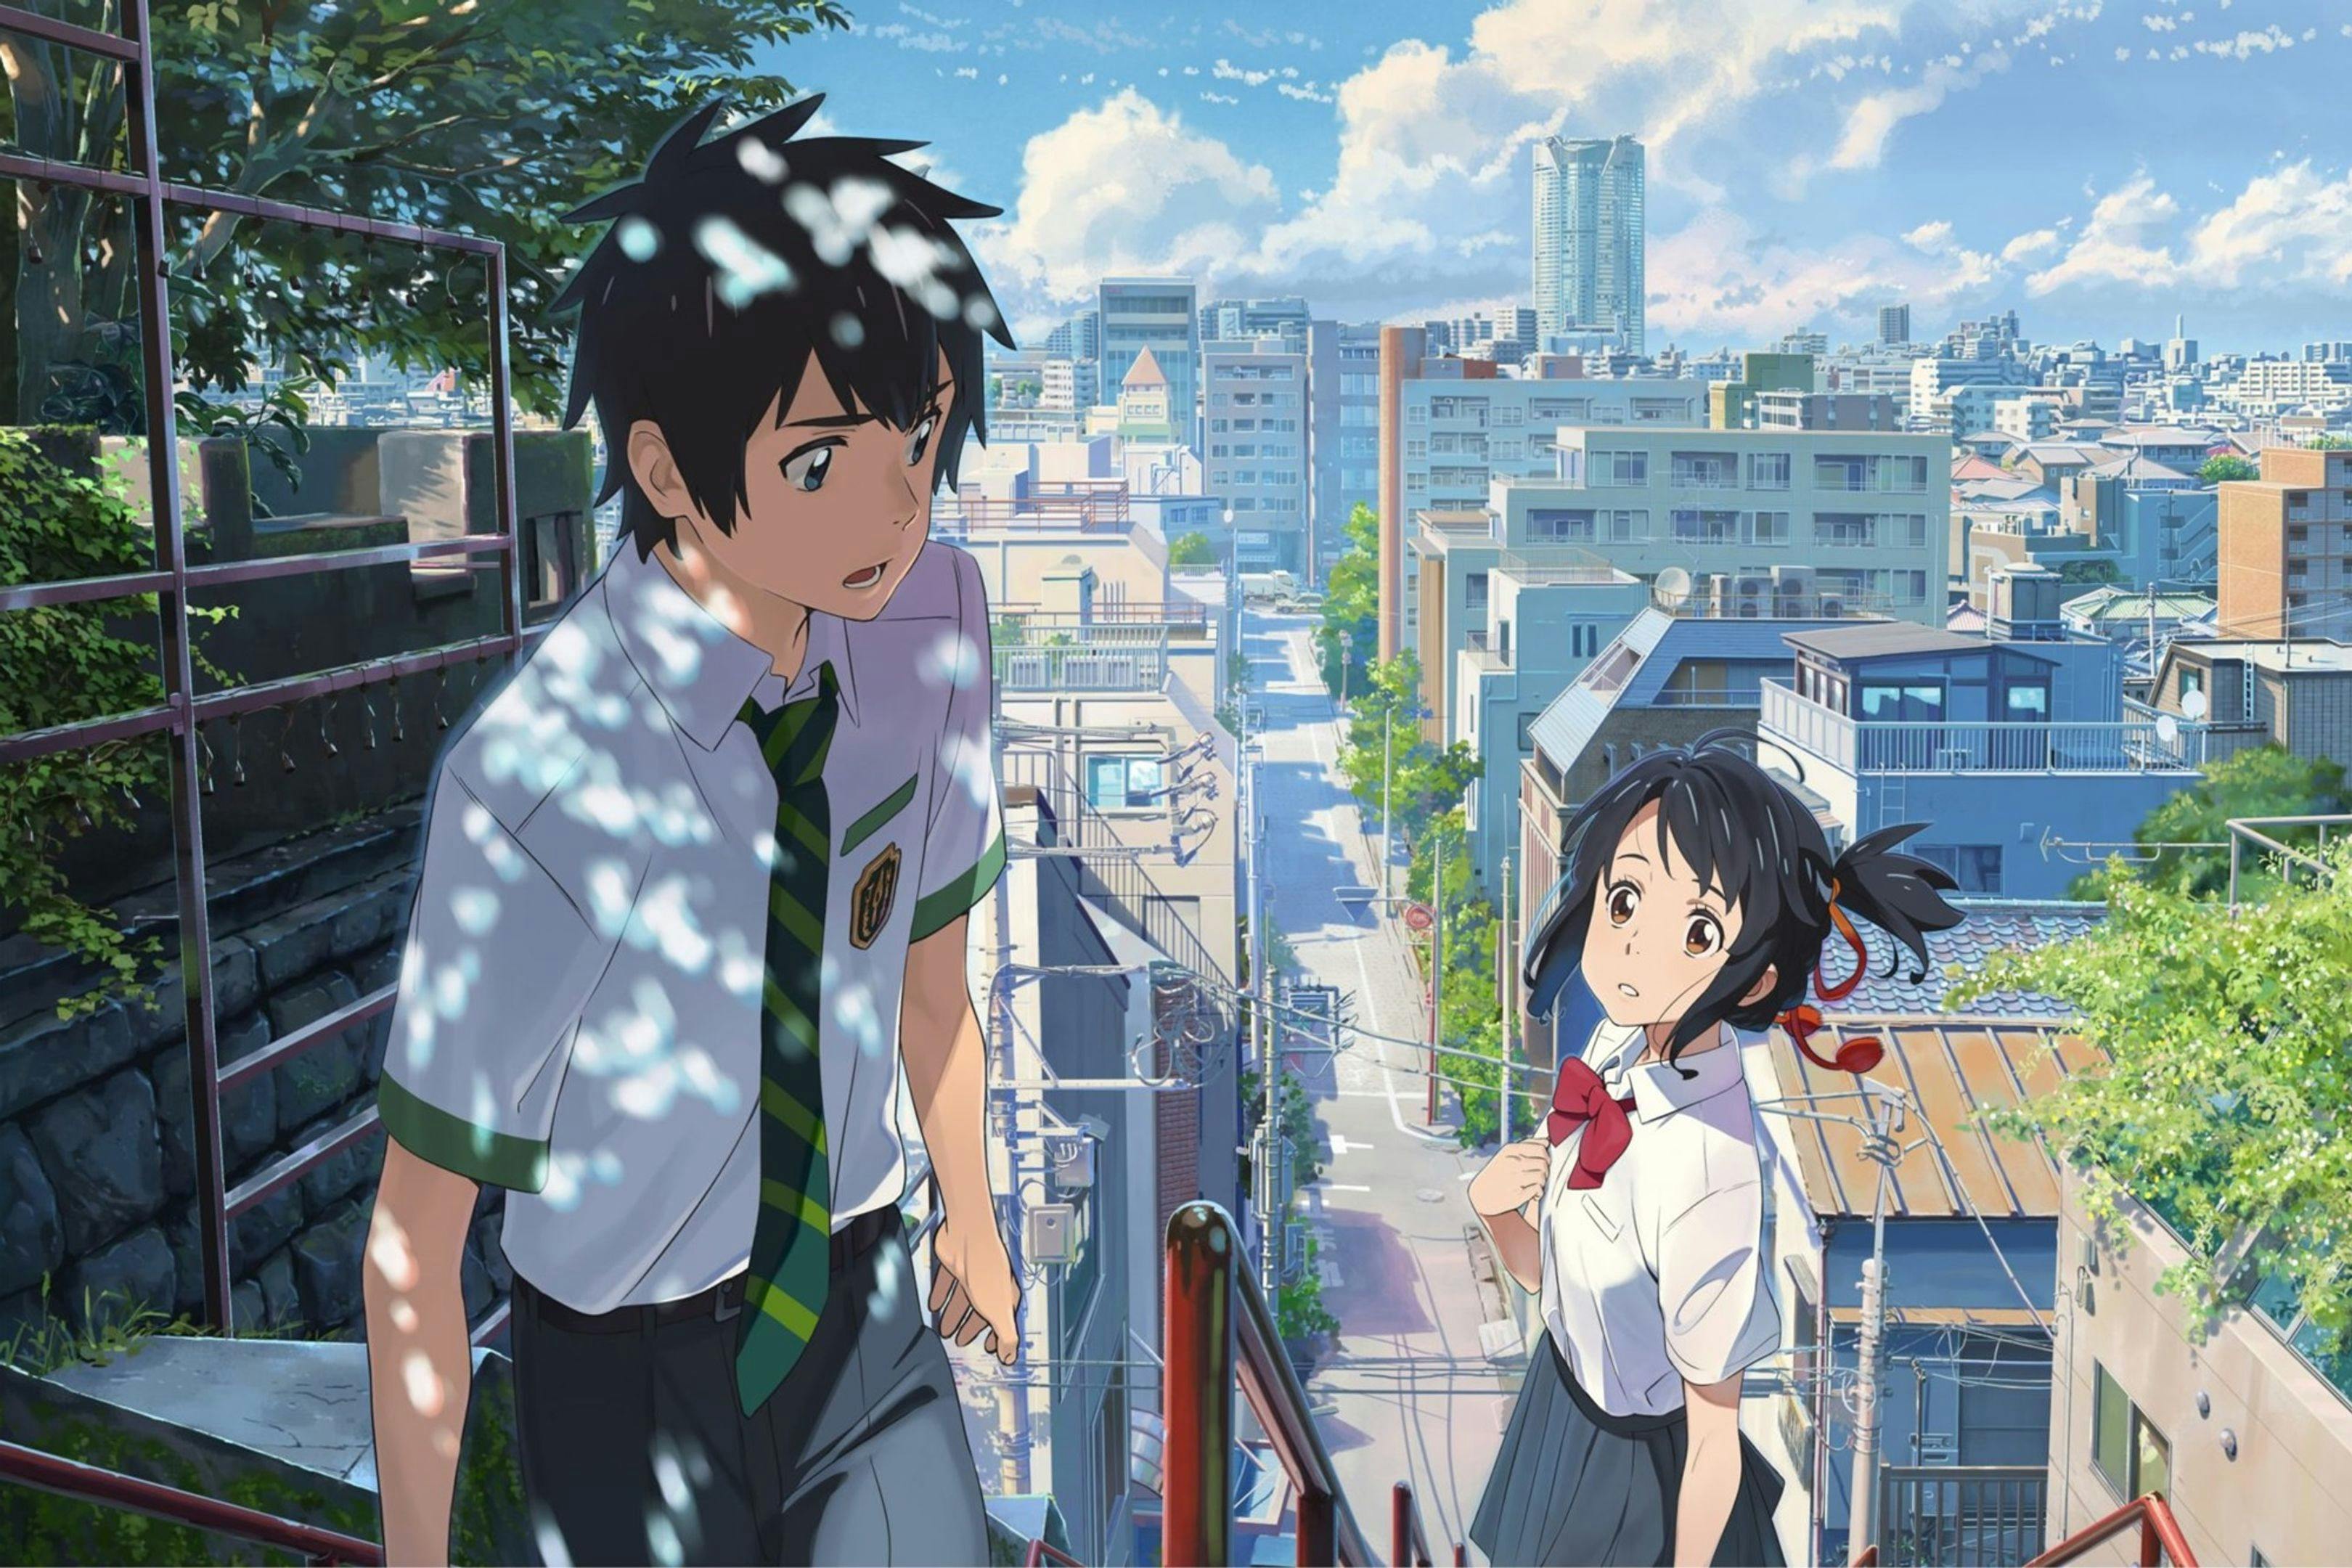 Fotograma promocional de 'Your name', uno de los grandes éxitos de Makoto Shinkai